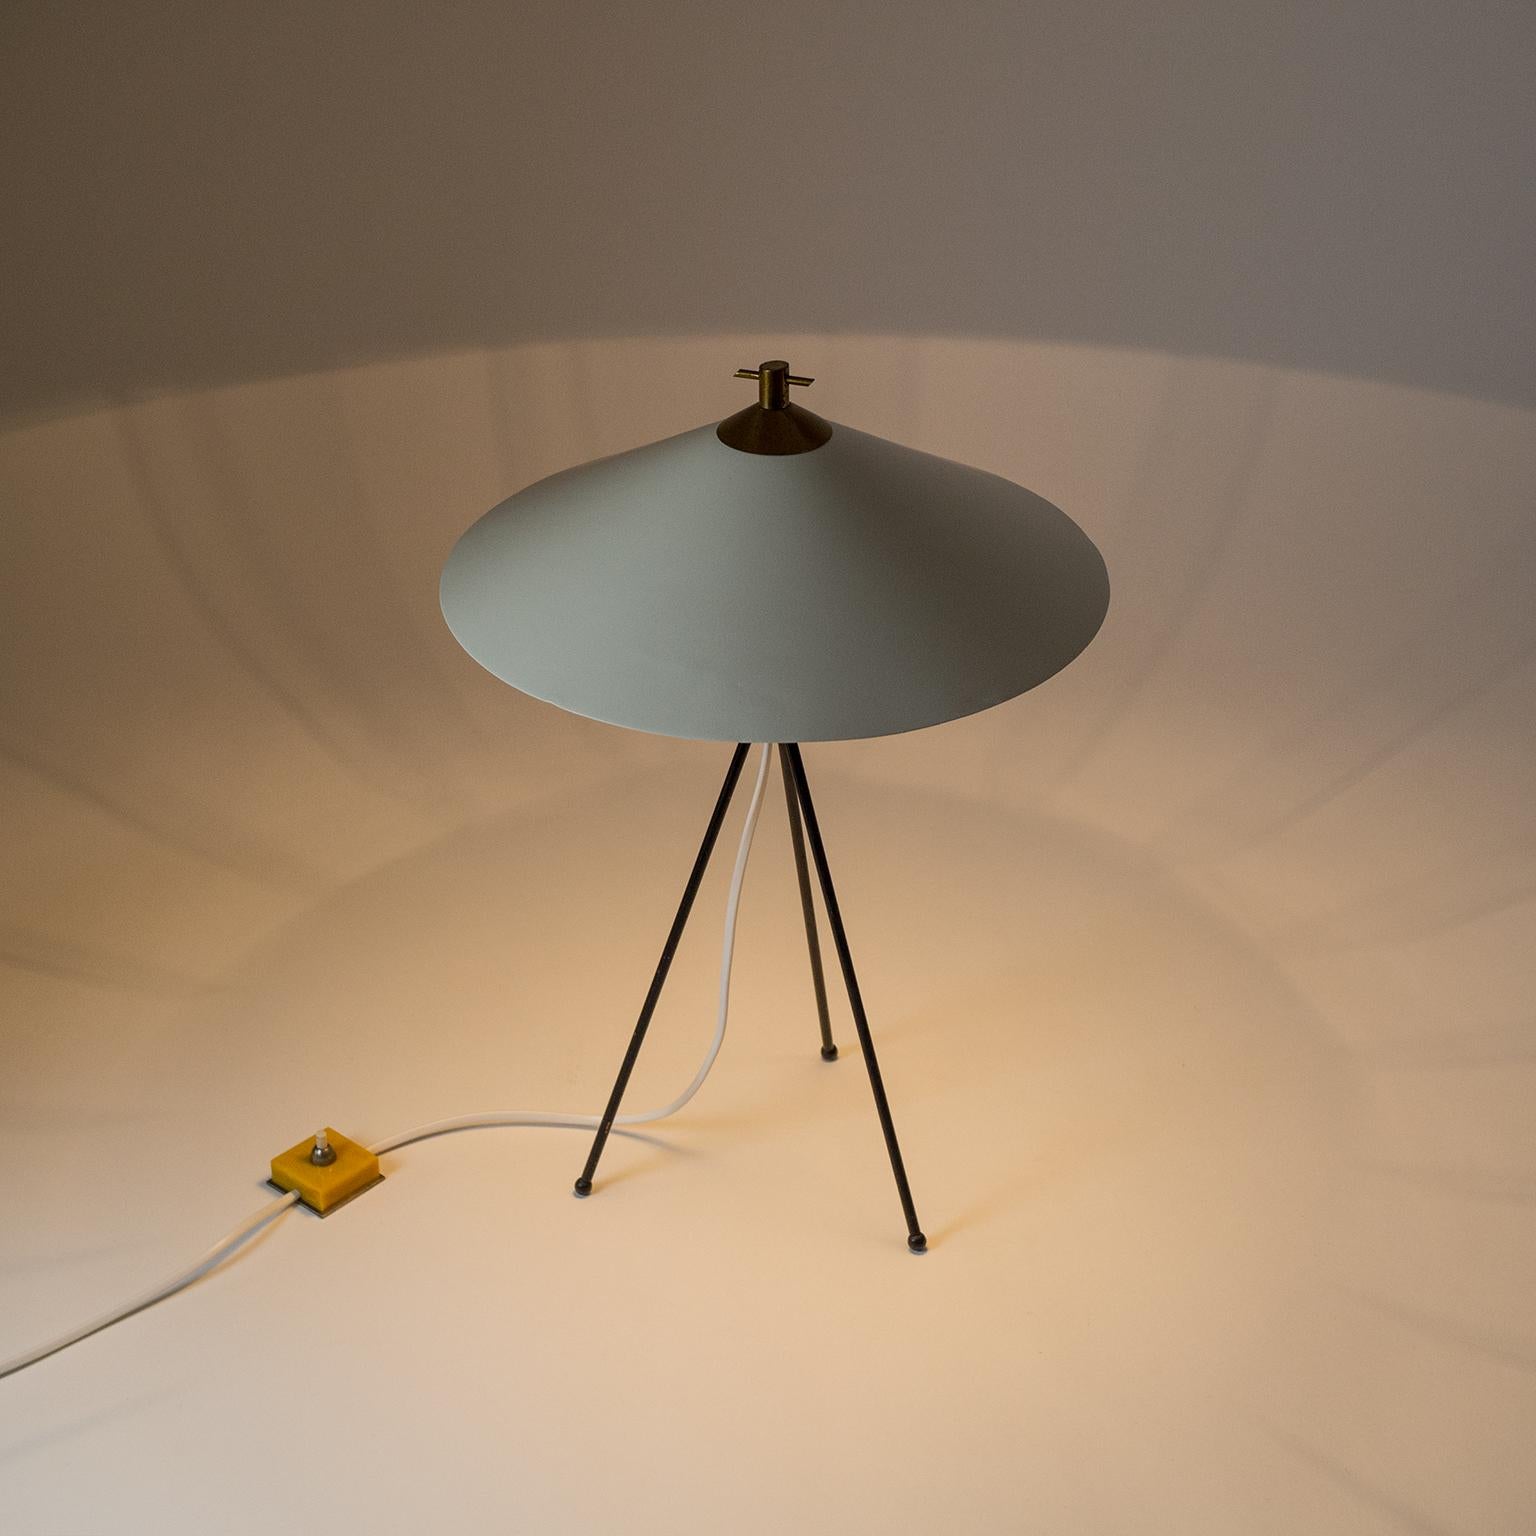 Modernist Italian Tripod Table Lamp, 1950s (Lackiert)